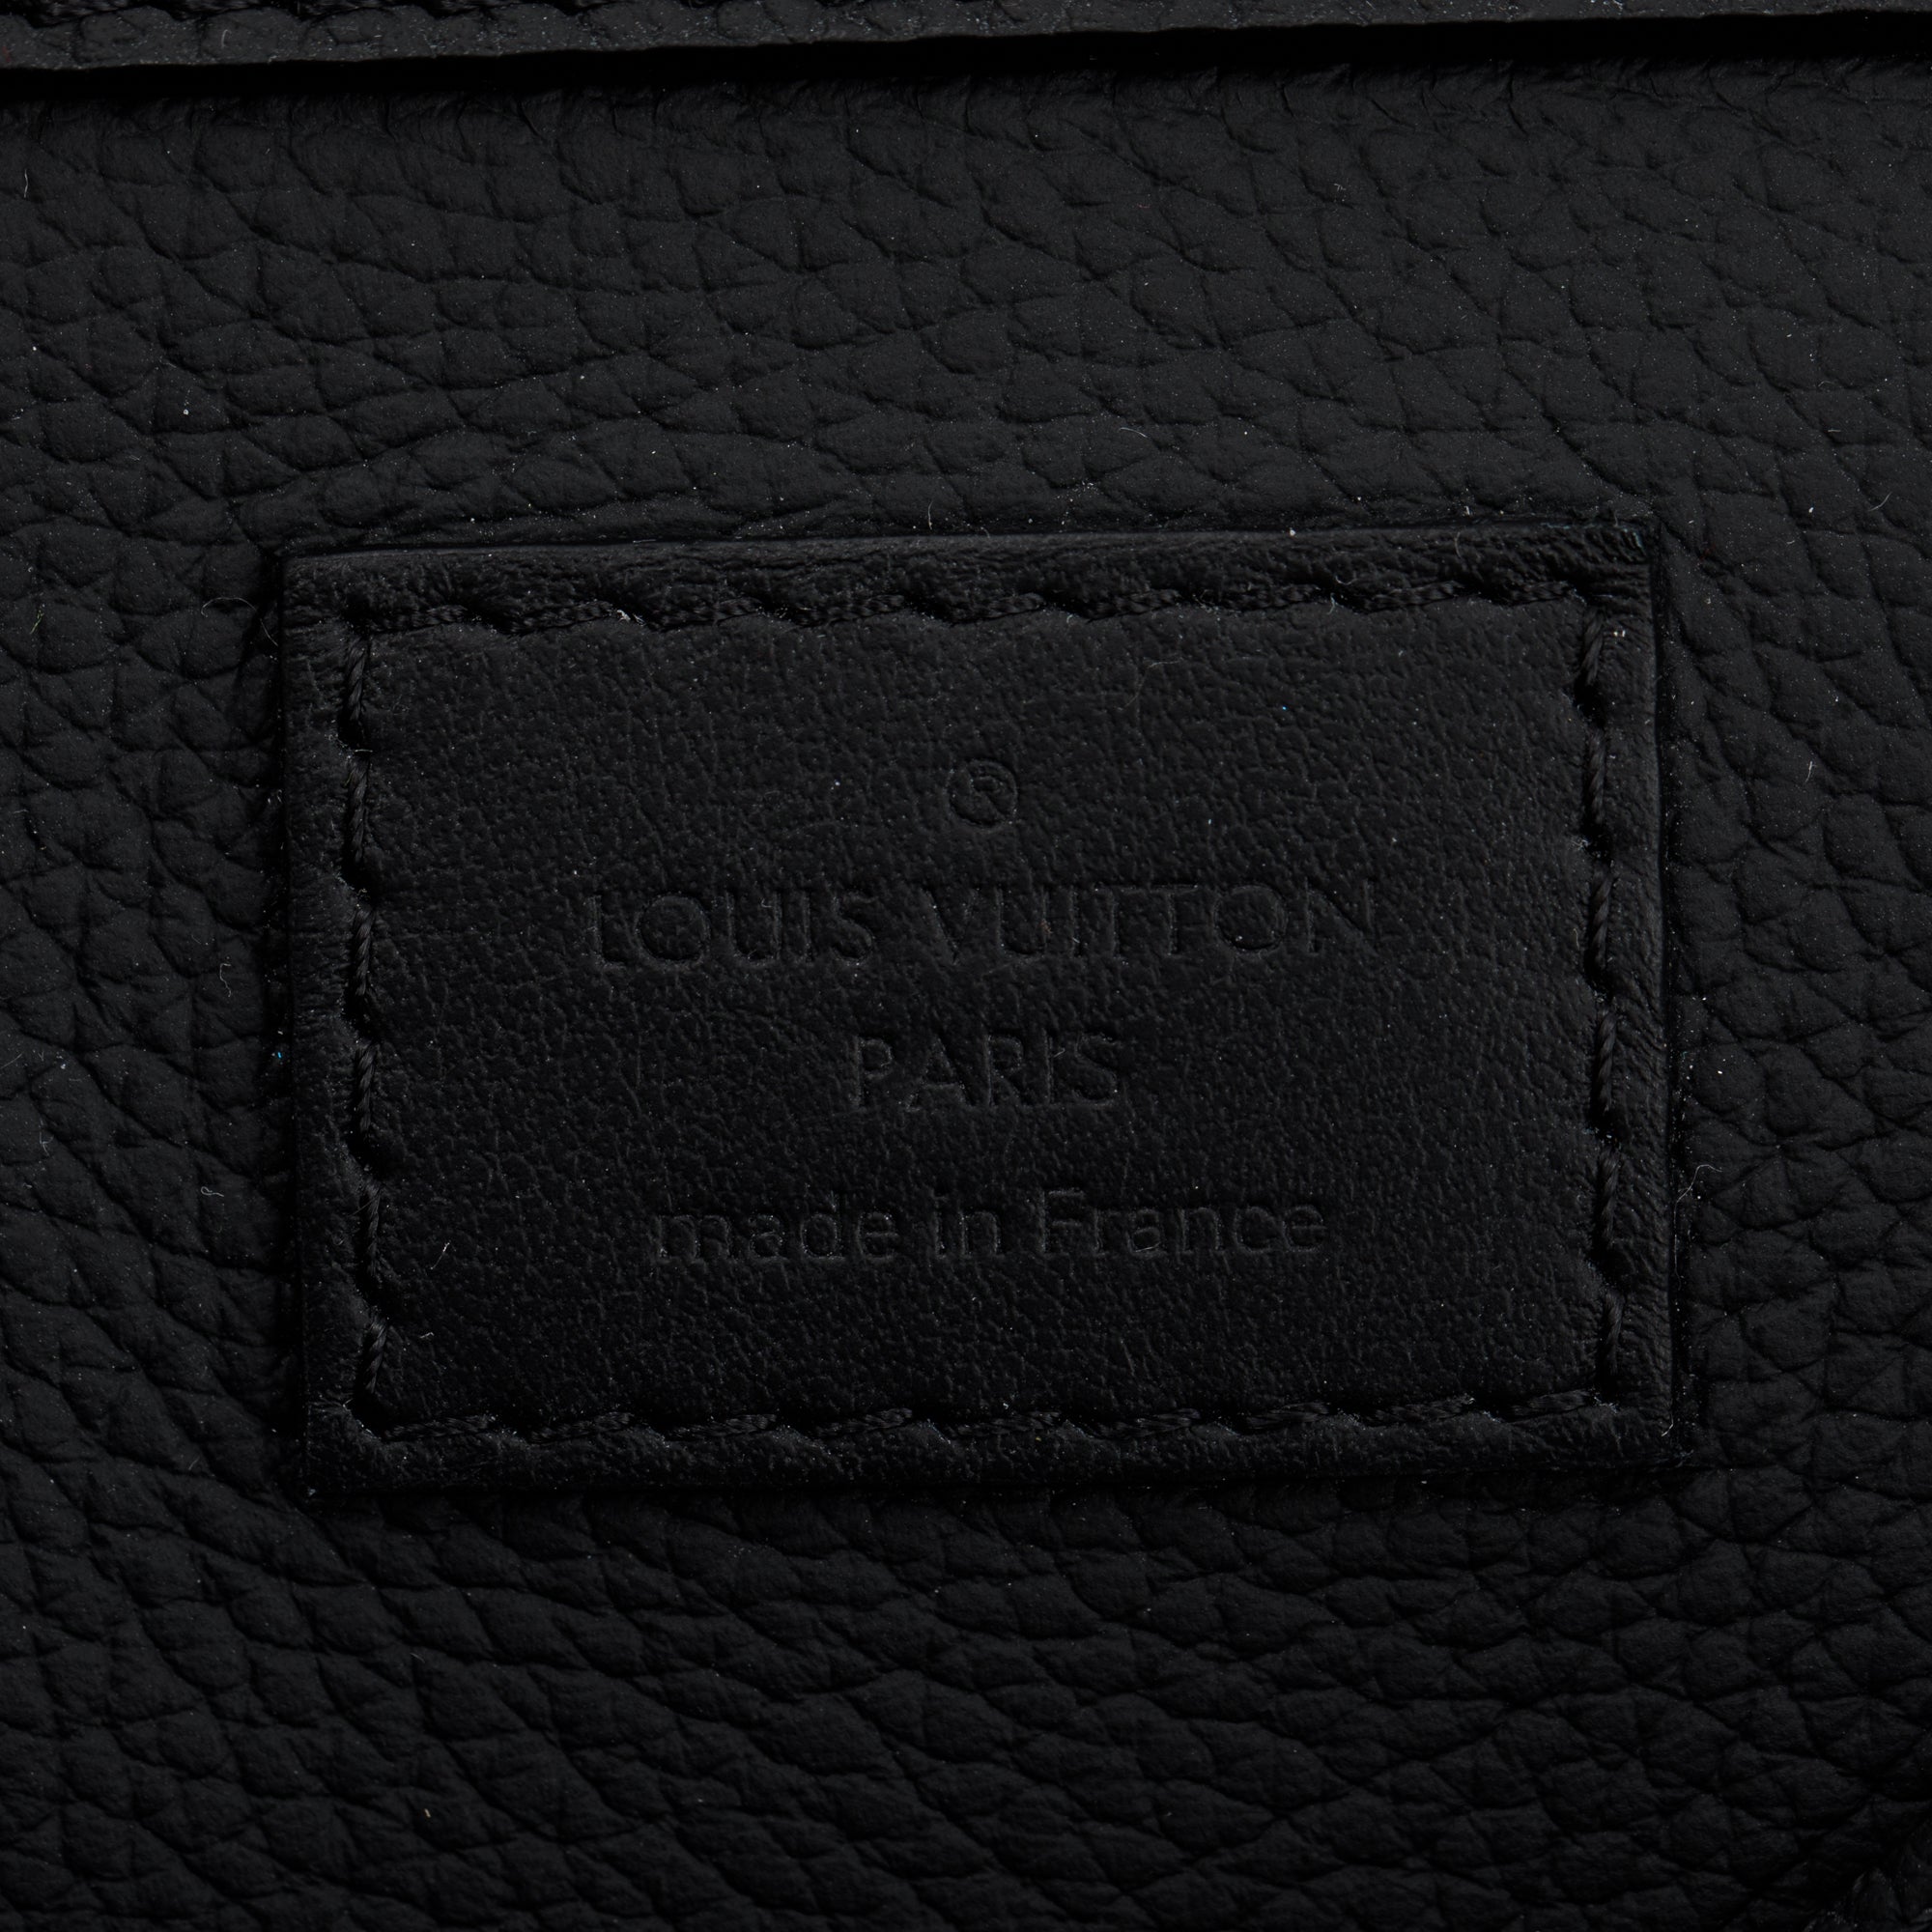 Fanny Pack Bag Black Aerogram Slingbag Designer New Grained Calfskin  Genuine Leather Sling Bag Wallet M59625 M57081 Mens Message W265e From  Sxknhf, $66.96